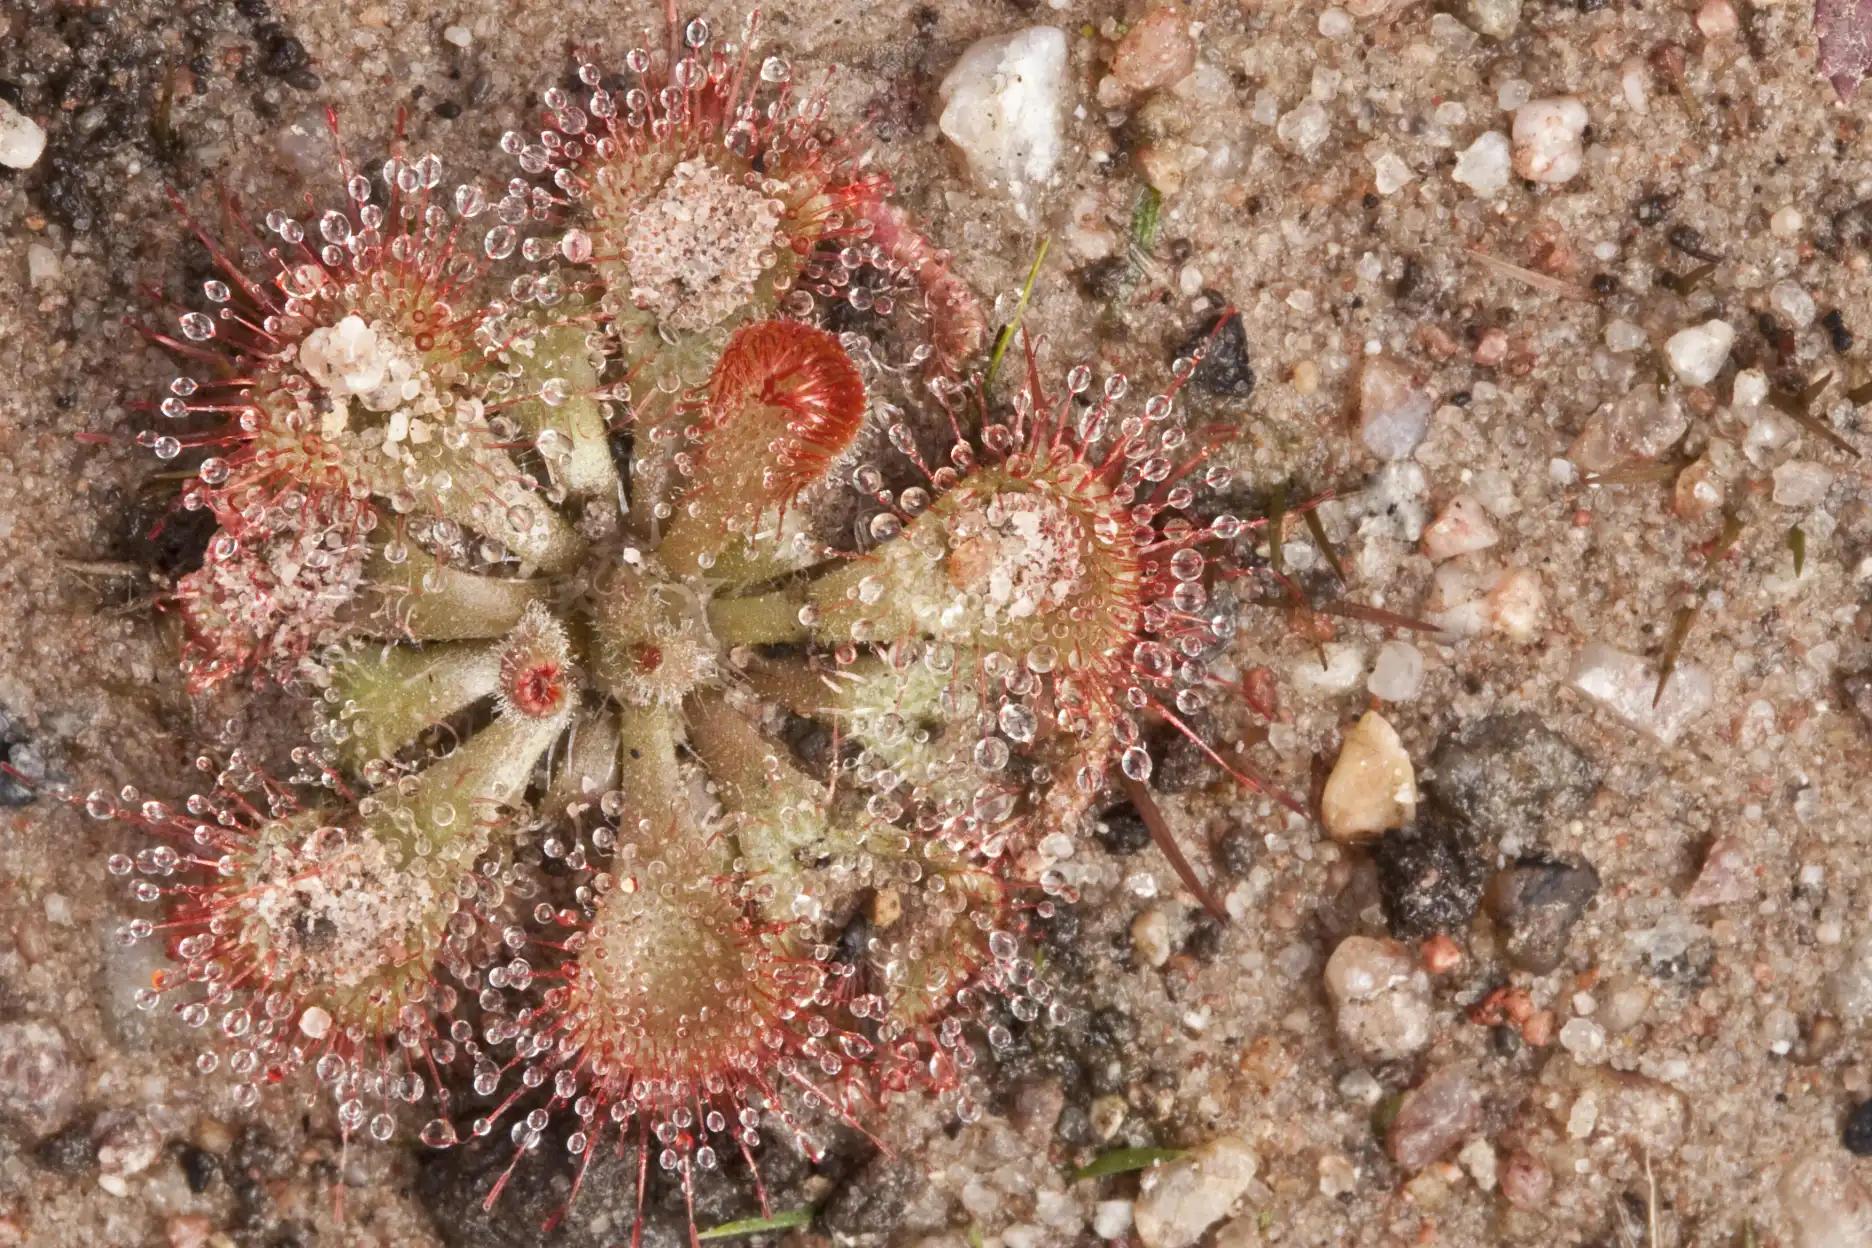 Drosera burmannii growing in sand at Phu Phan National Park